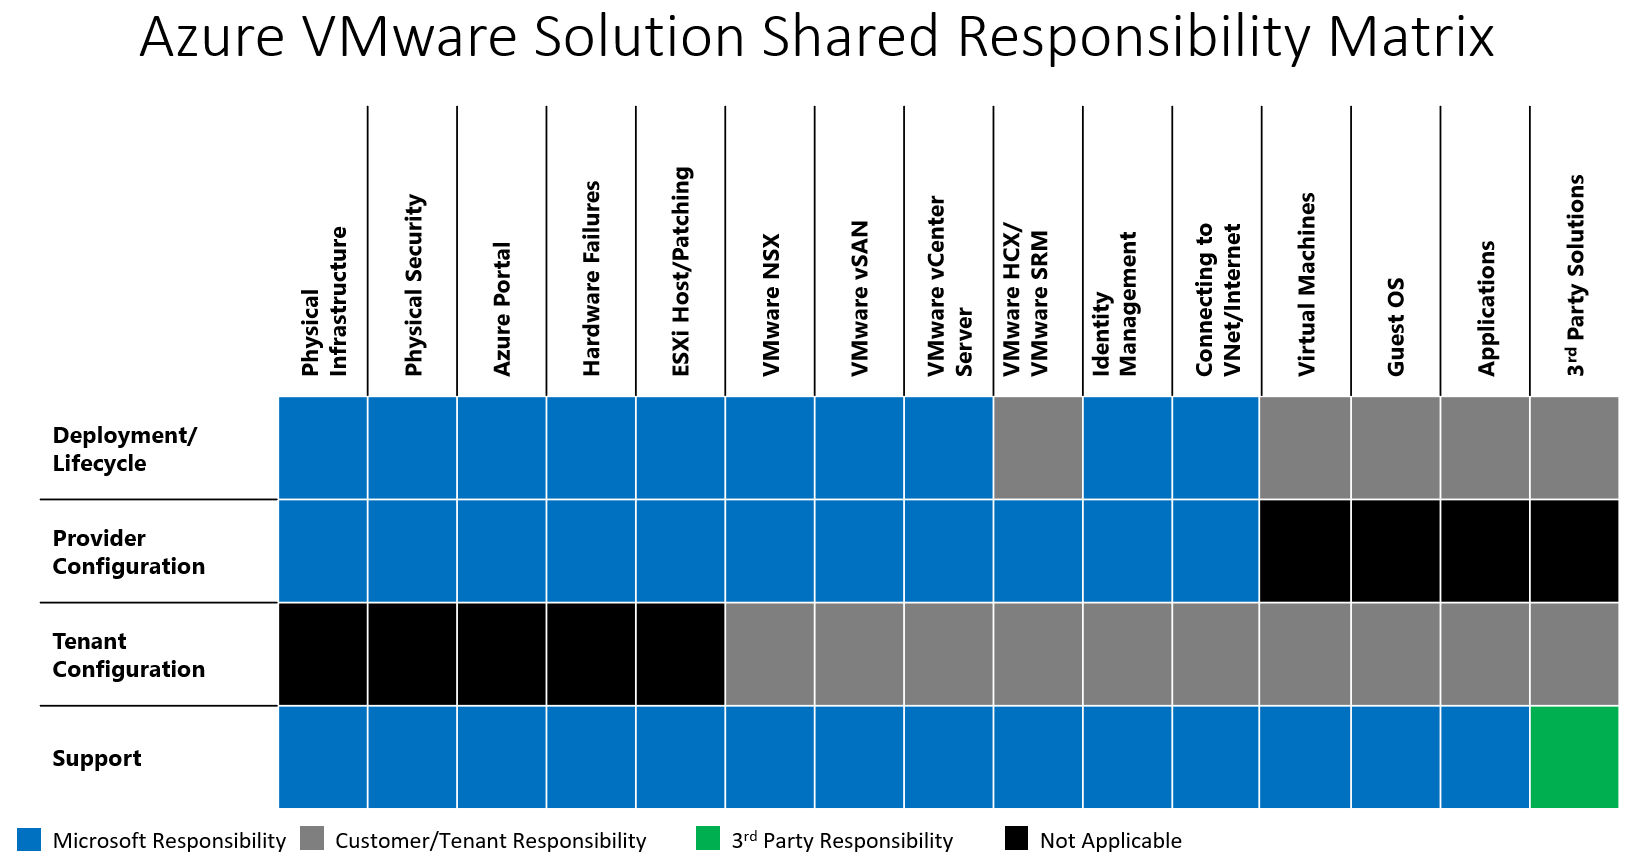 Screenshot of the high-level shared responsibility matrix for Azure VMware Solution.